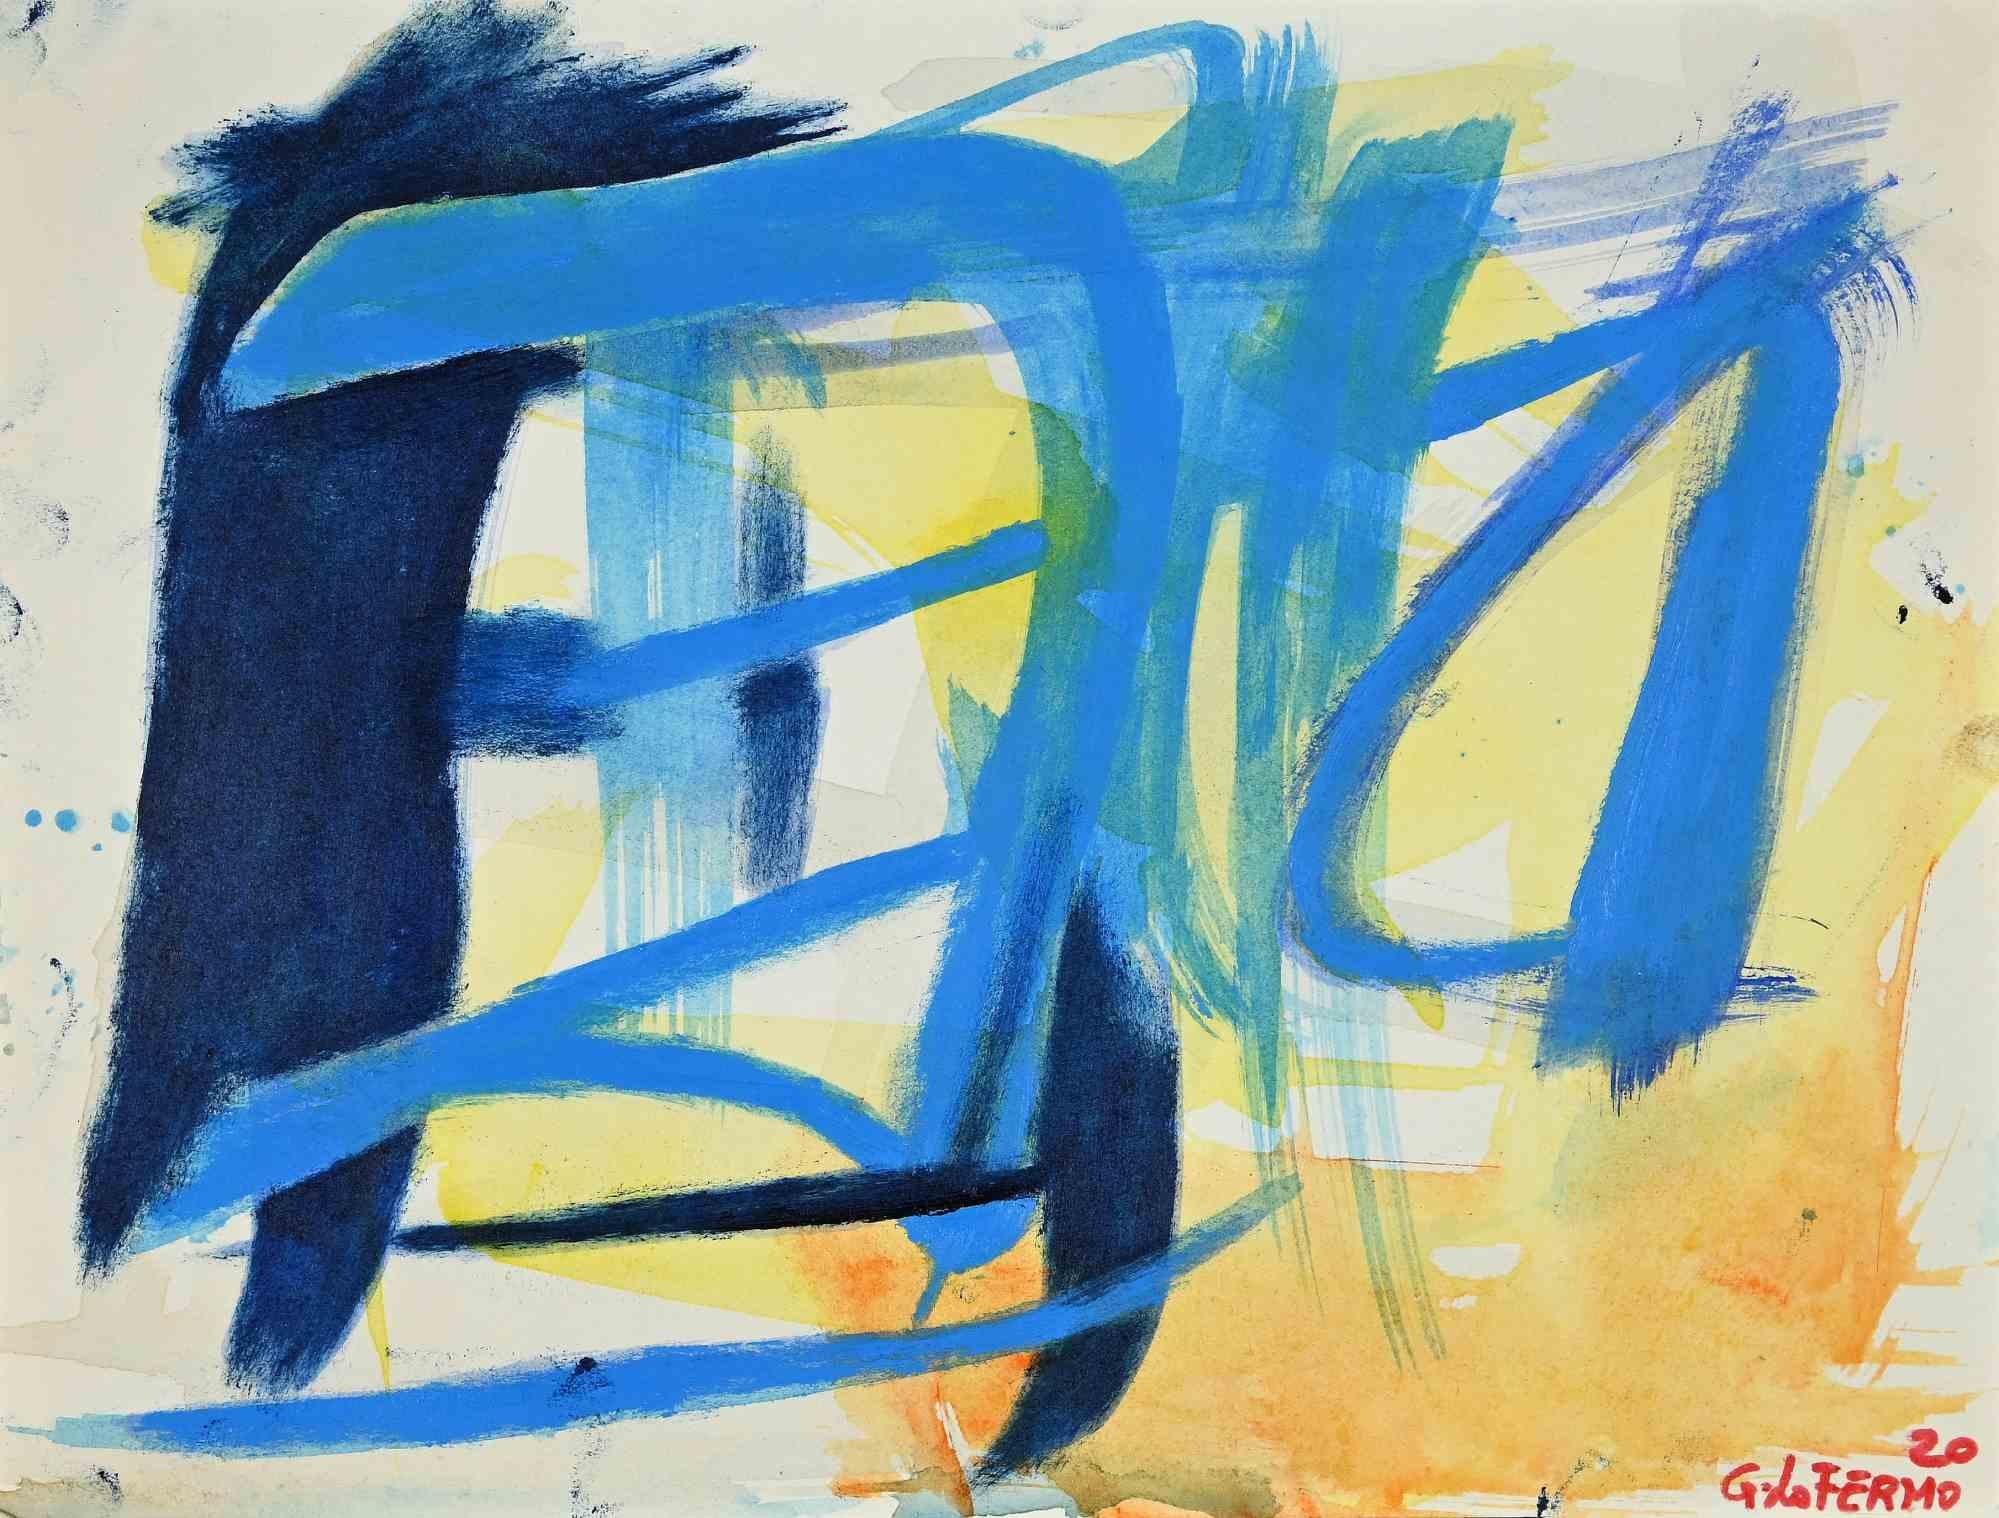 Abstract Composition - Tempera and Watercolor by Giorgio Lo Fermo - 2020